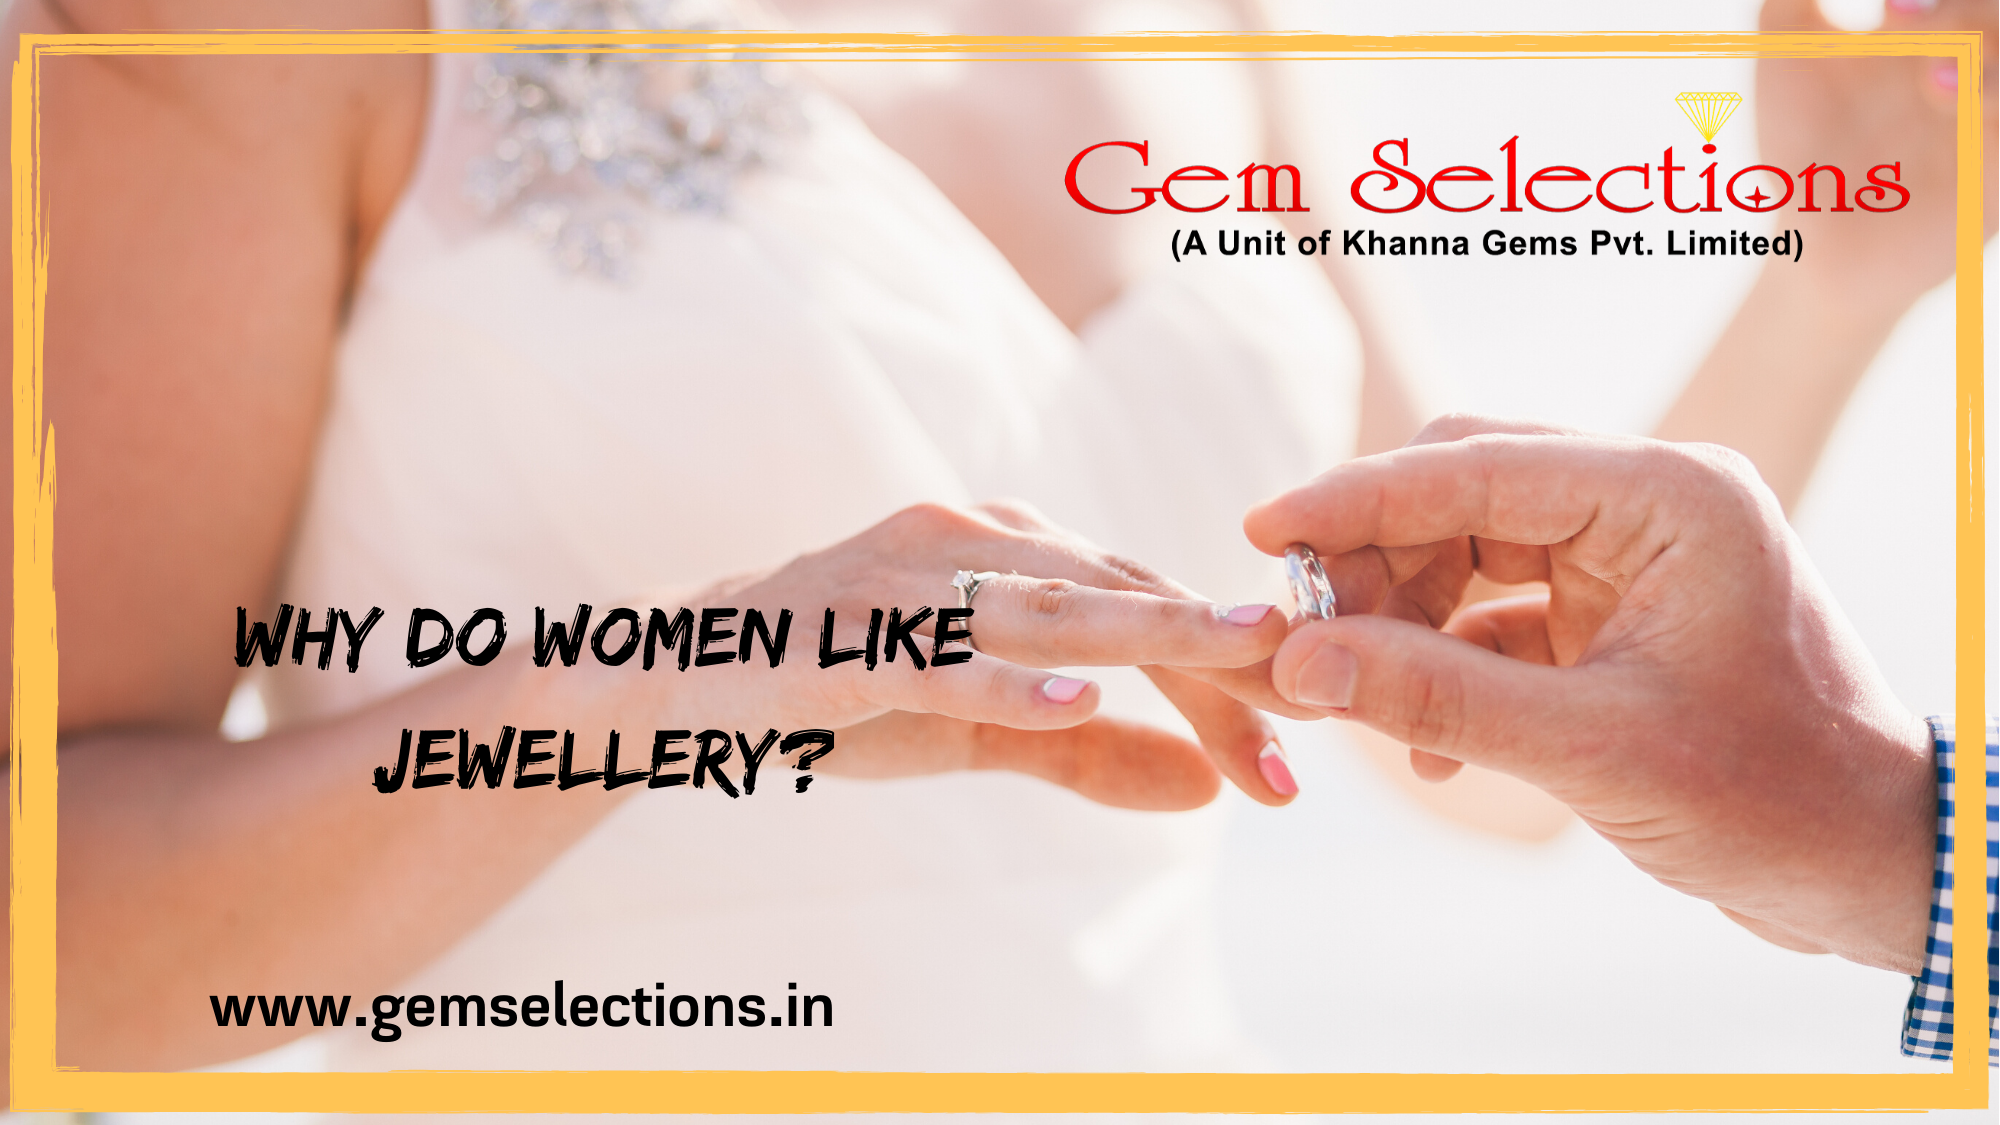 Why do women Love Gemstones and jewelry?